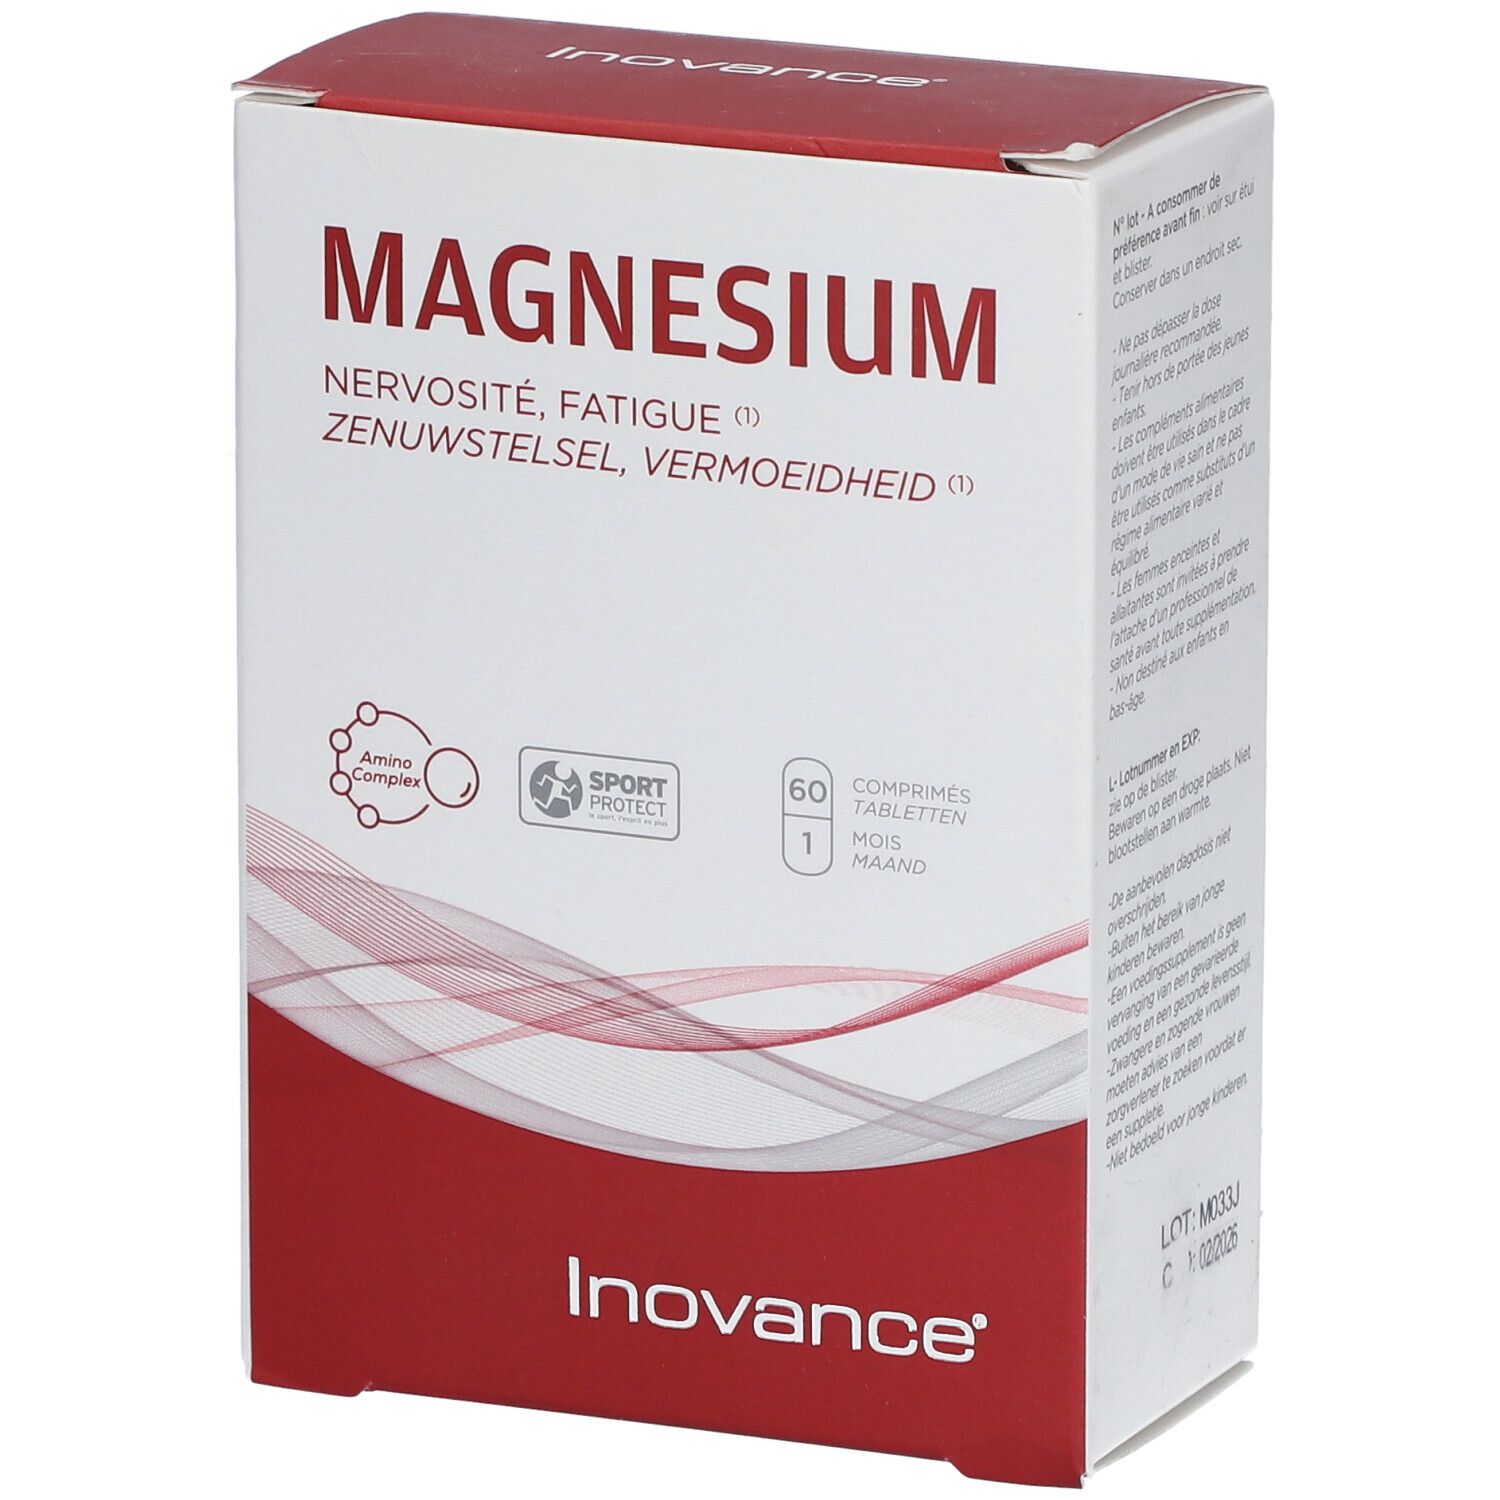 Inovance Magnesium